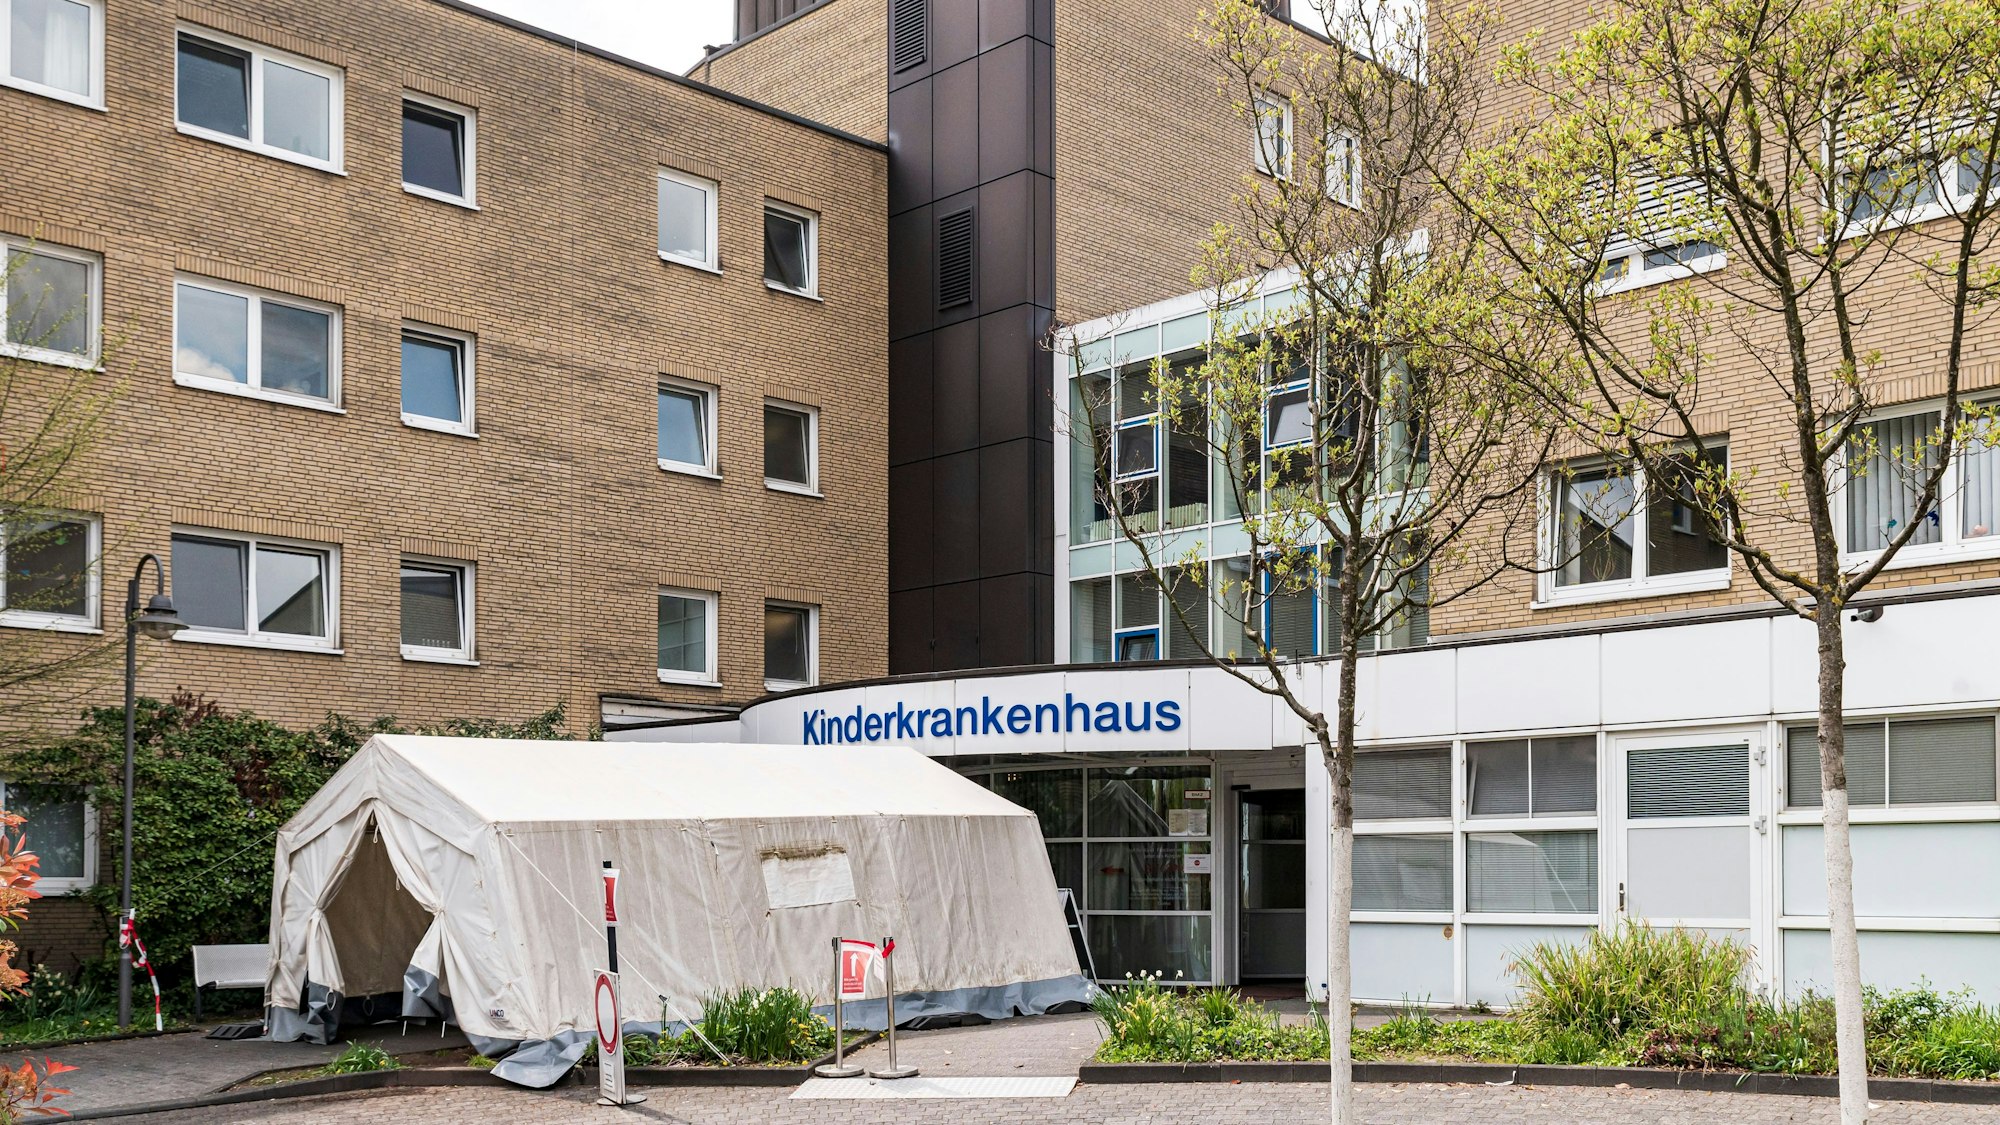 Das Kinderkrankenhaus Amsterdamer Straße.